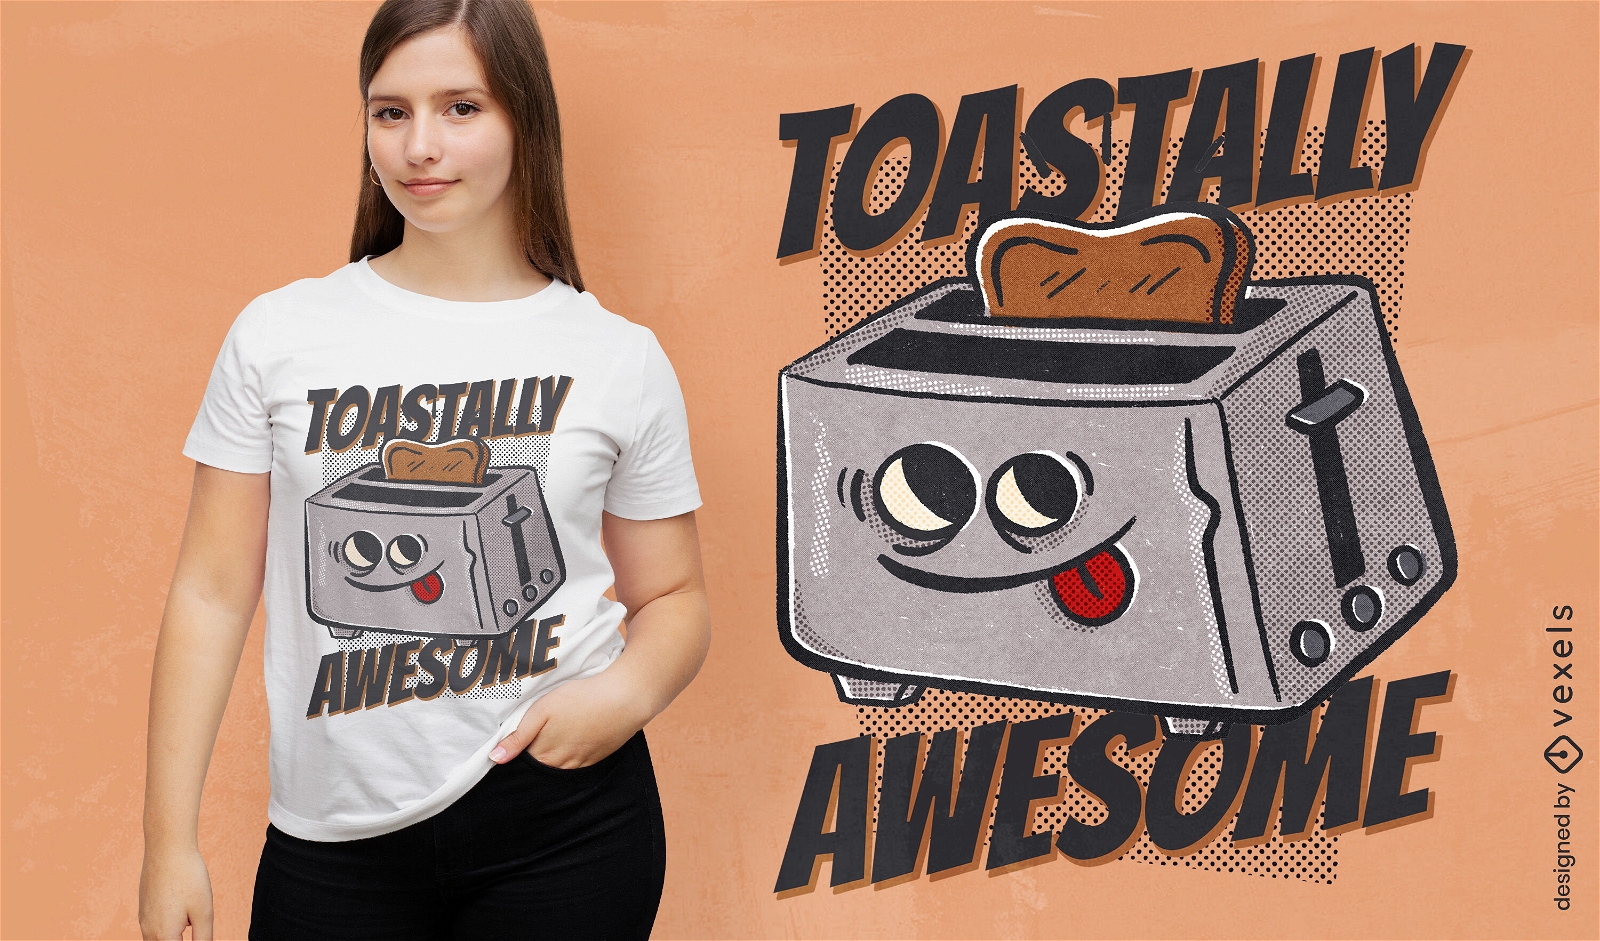 Toaster fun pun t-shirt design